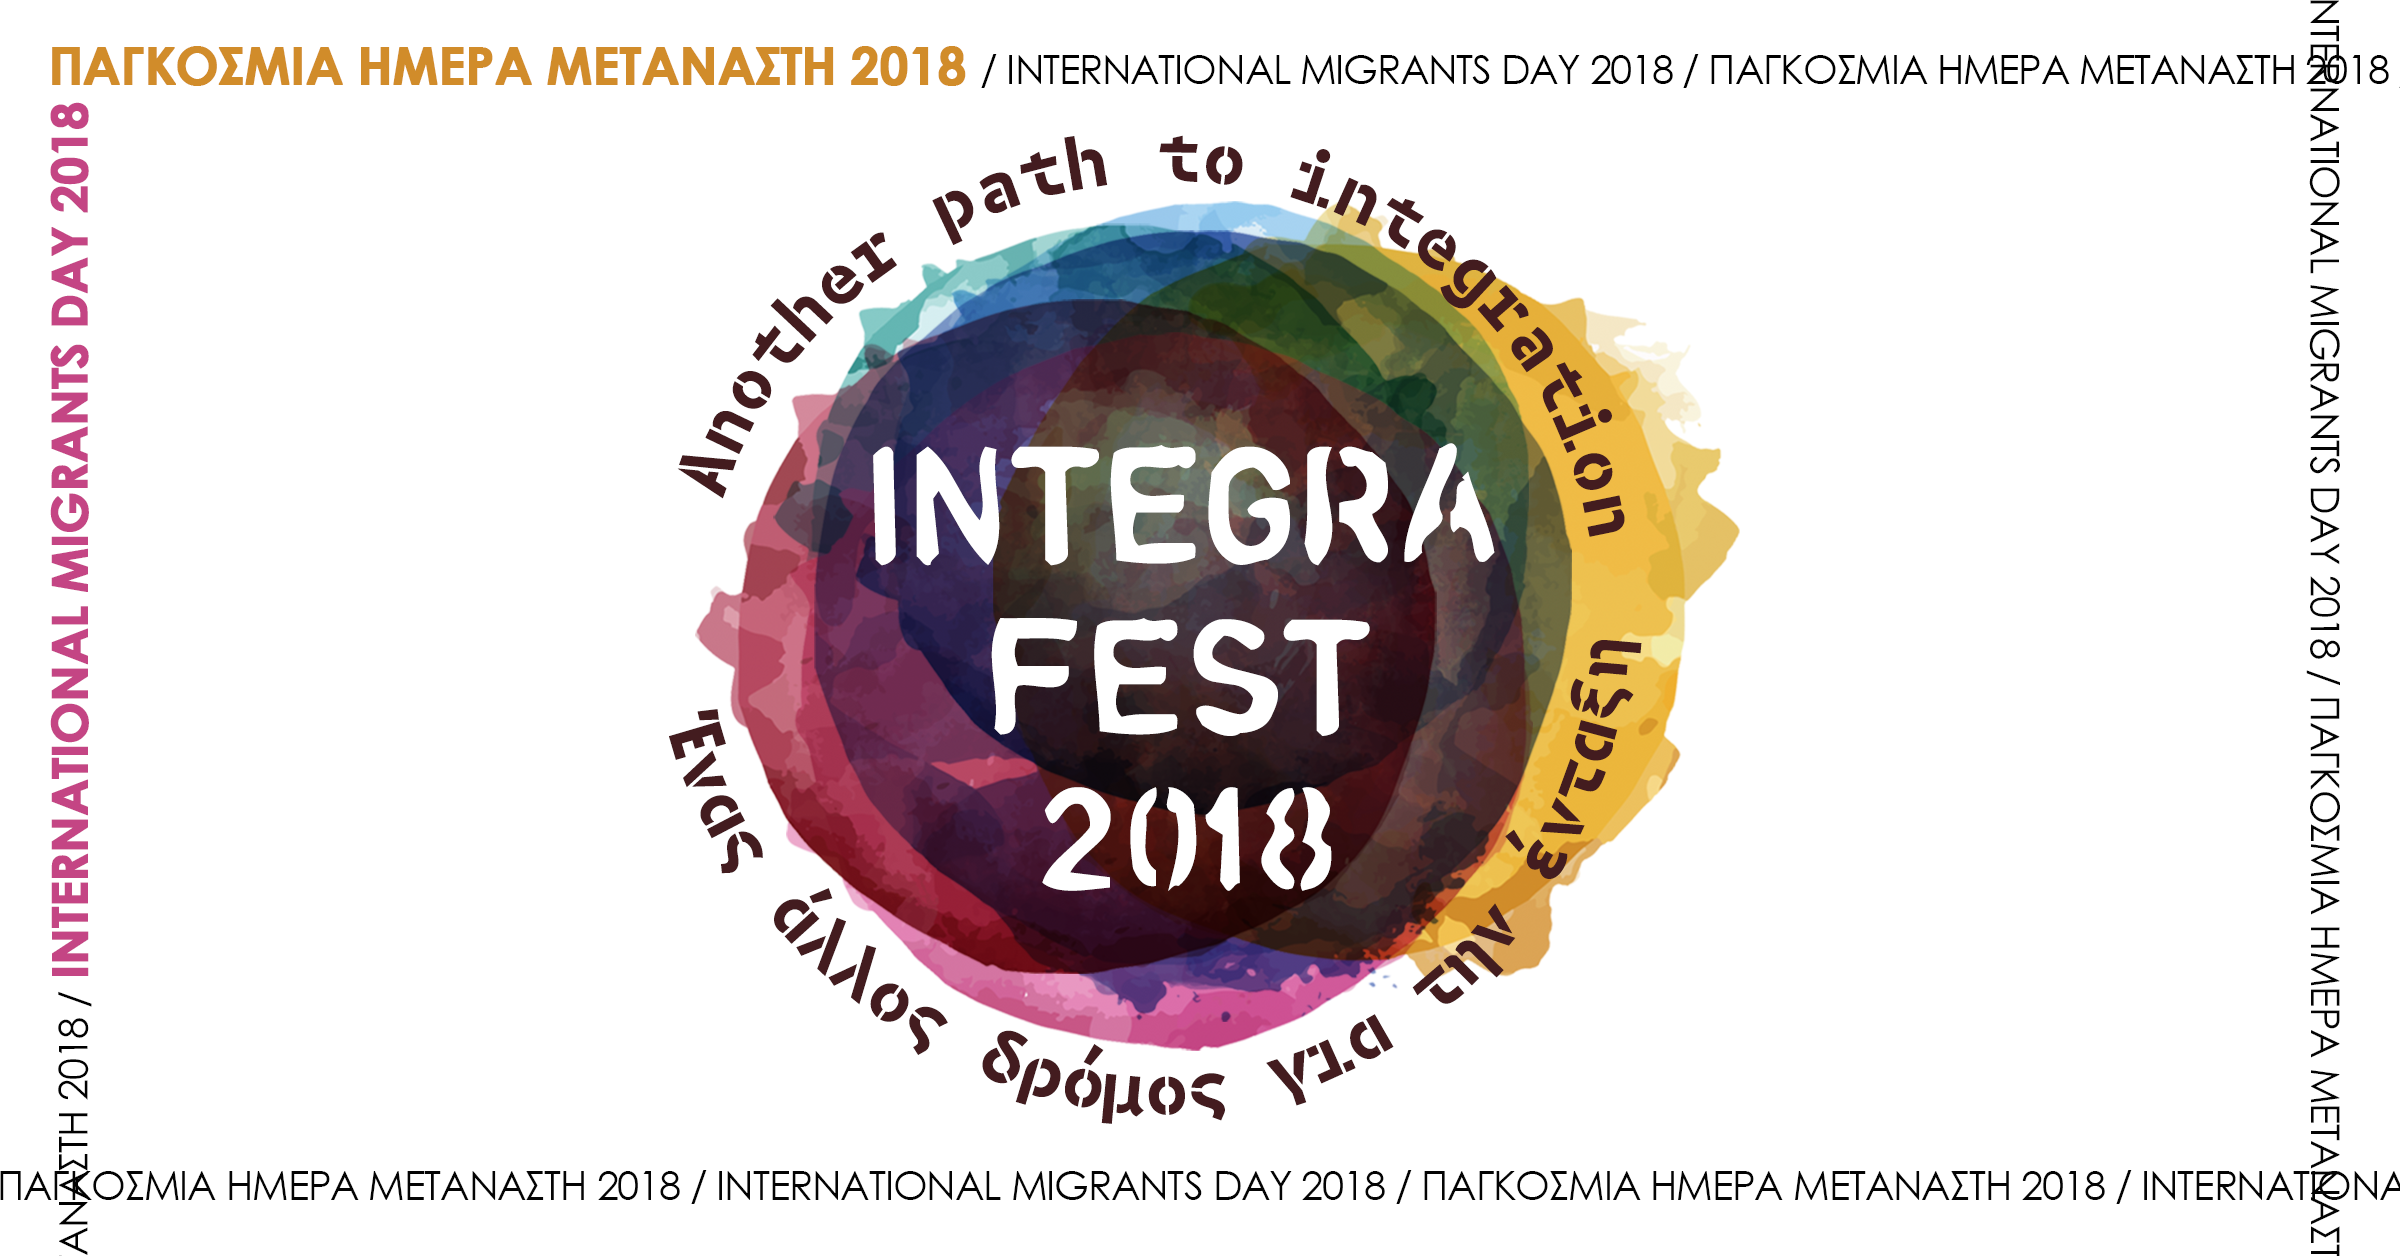 Integra Fest 2018 / Ένας άλλος δρόμος για την ένταξη